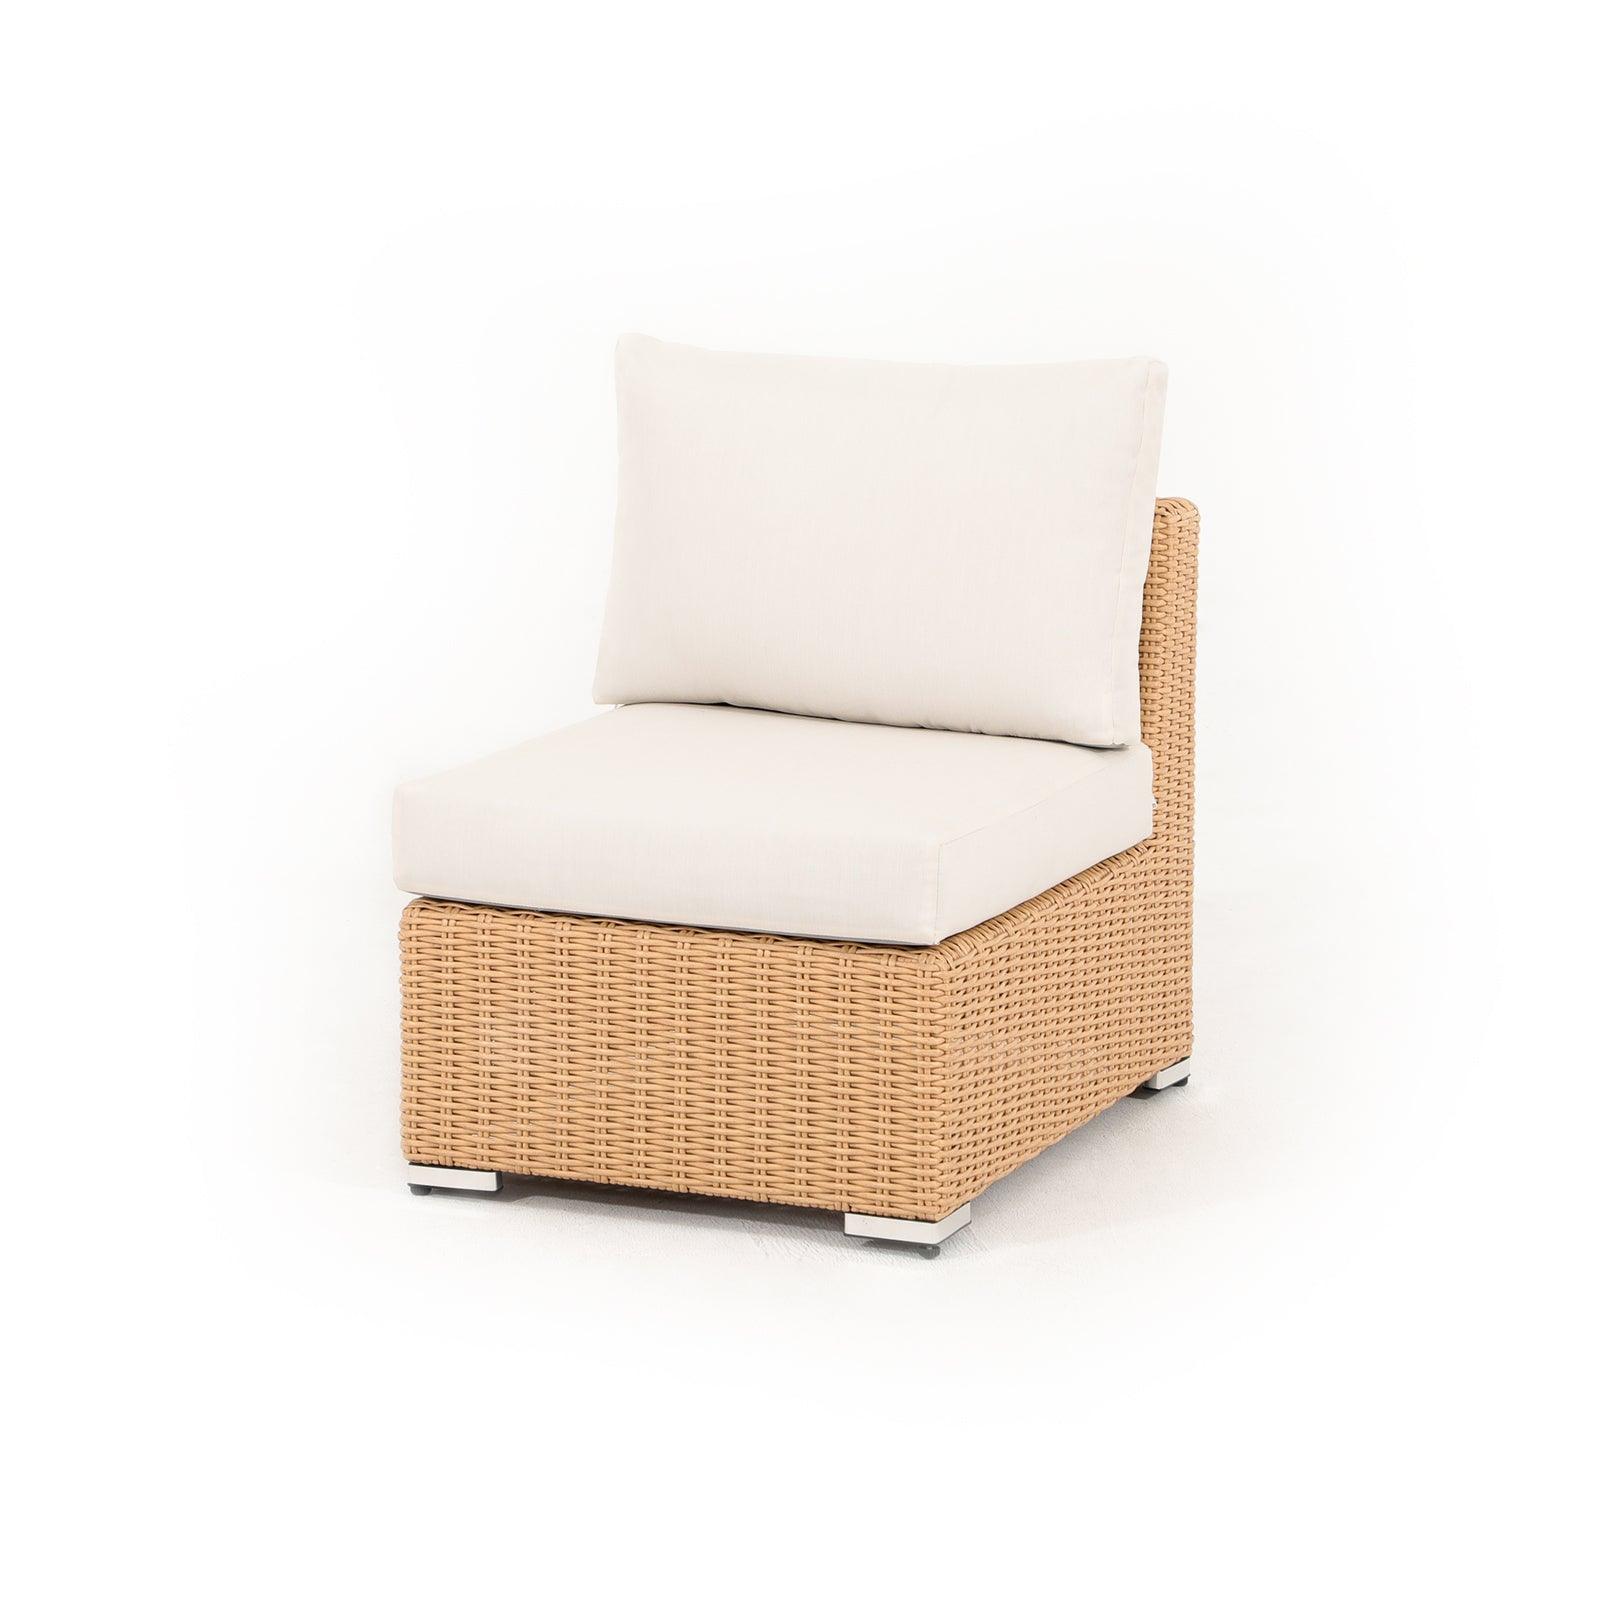 Elba natural color wicker outdoor armless single sofa with beige cushions- Jardina Furniture